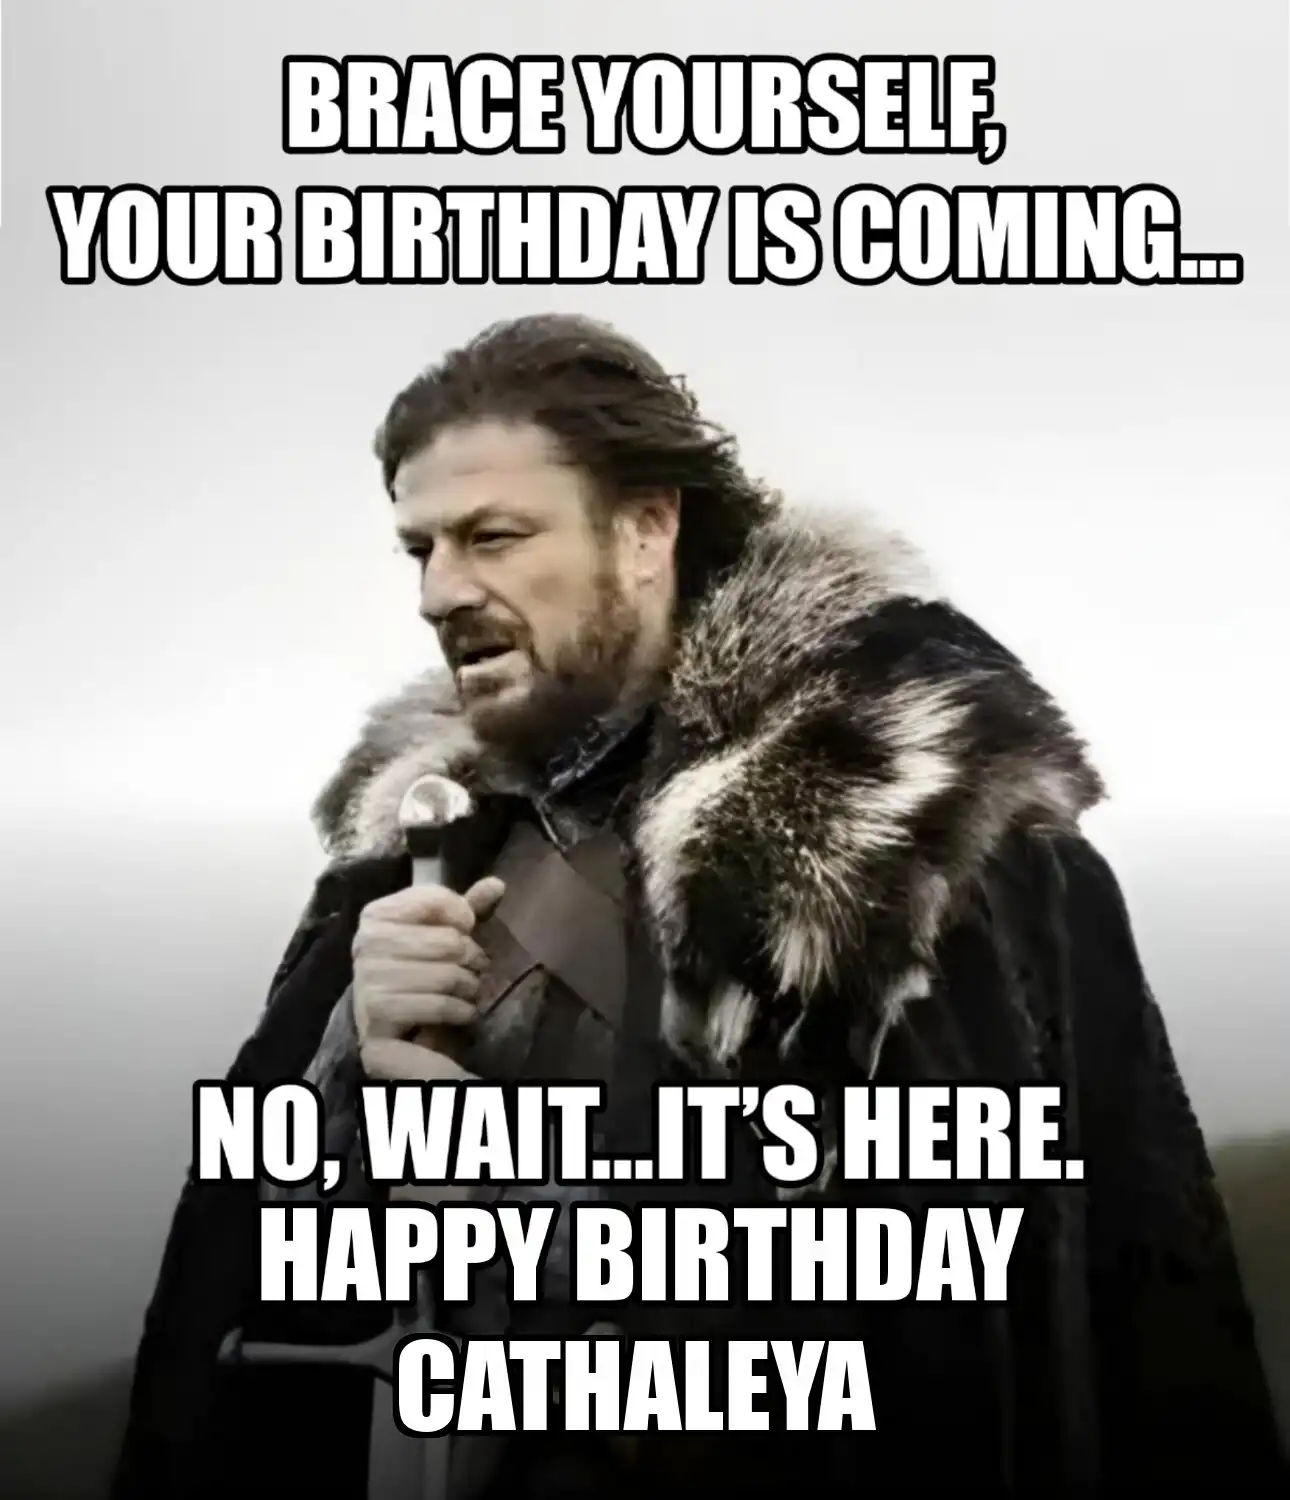 Happy Birthday Cathaleya Brace Yourself Your Birthday Is Coming Meme